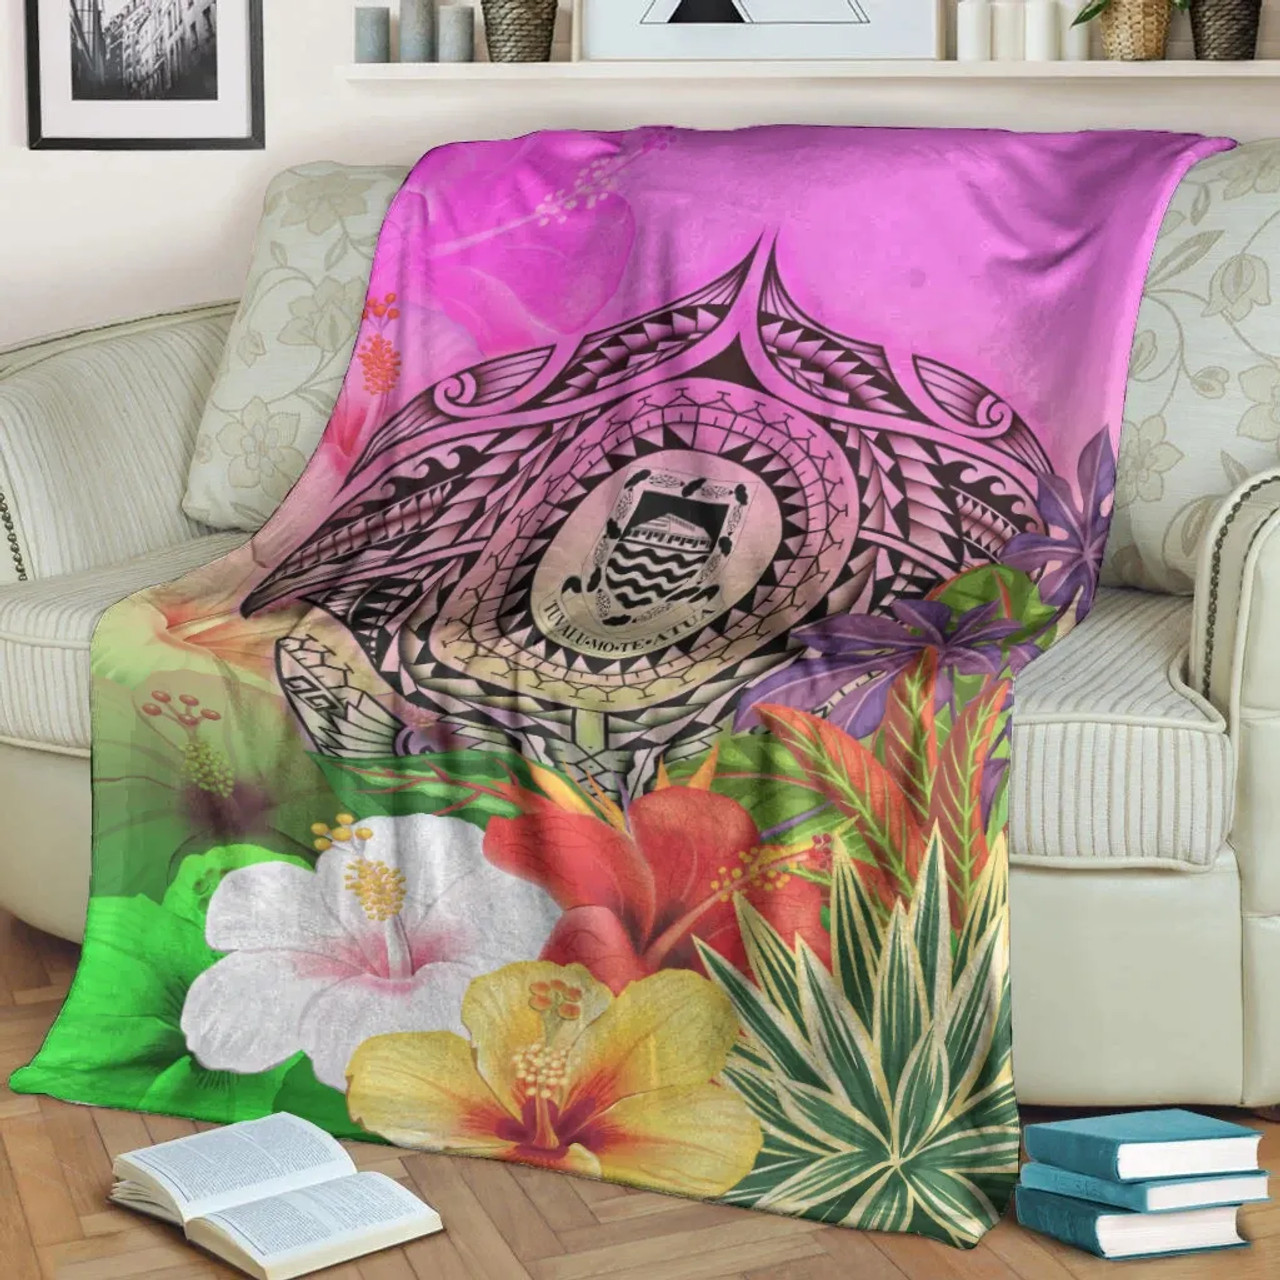 Tuvalu Premium Blanket - Manta Ray Tropical Flowers 3